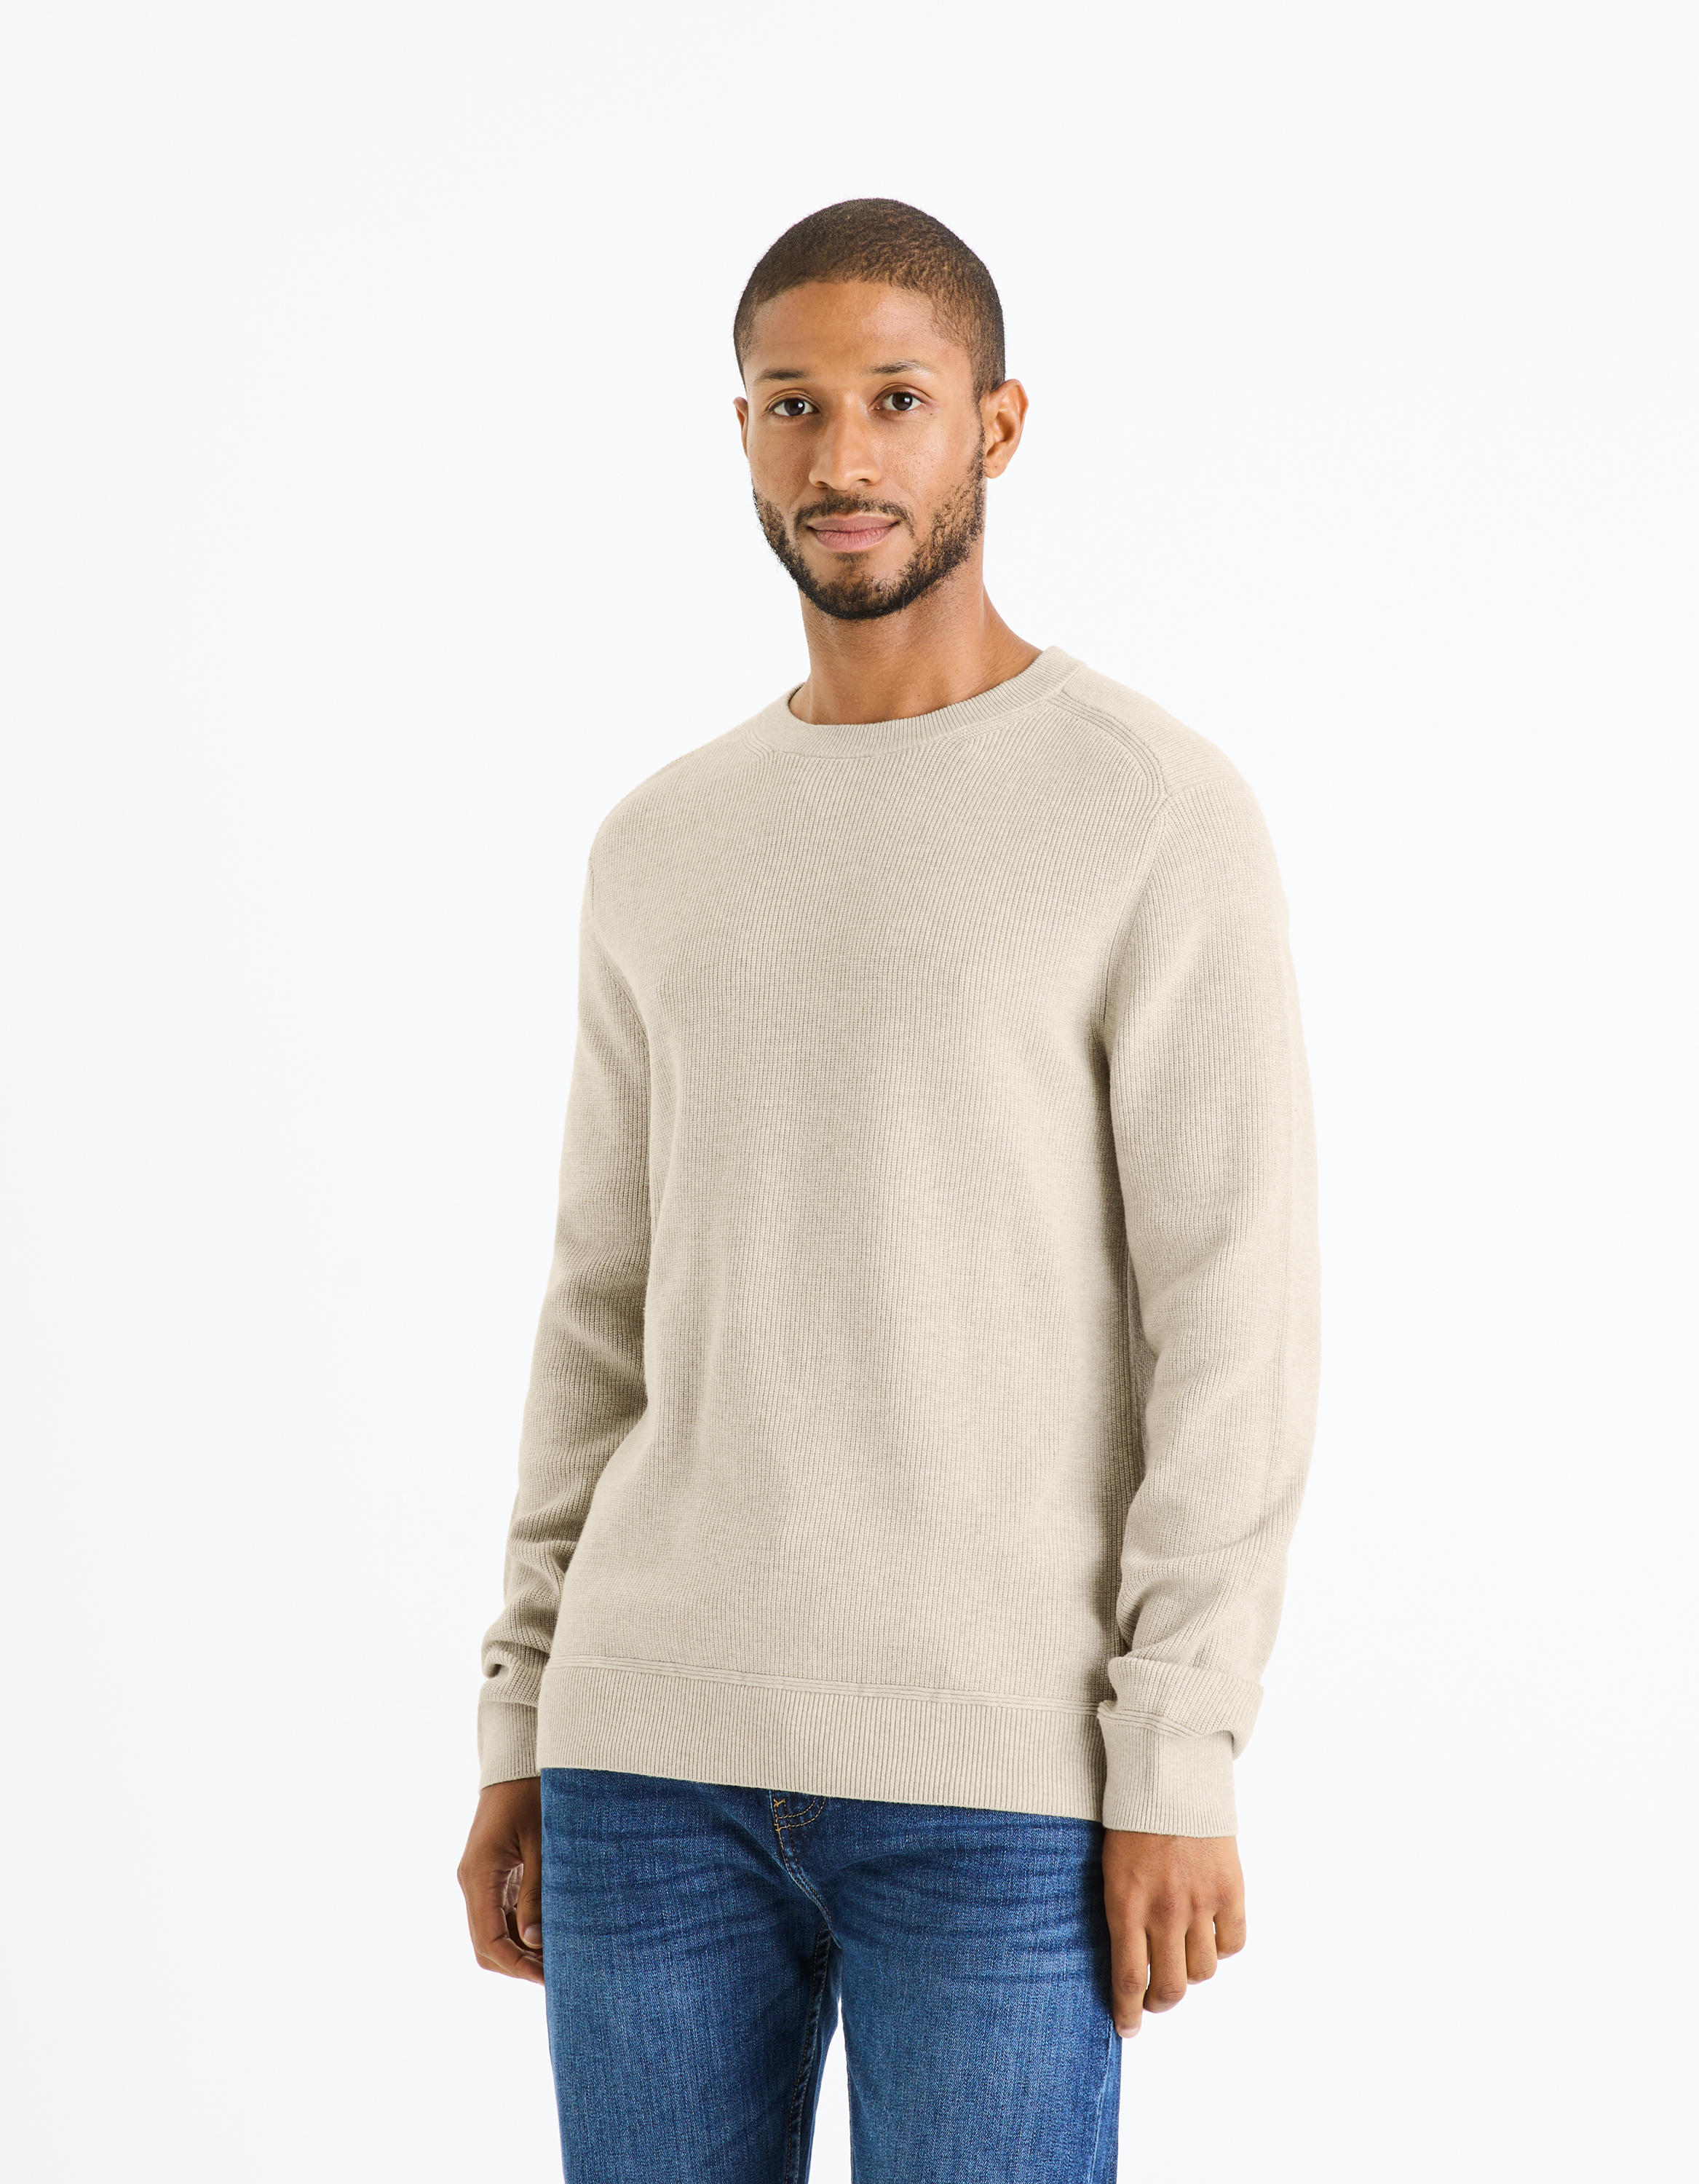 Celio Femoon Sweater - Men's